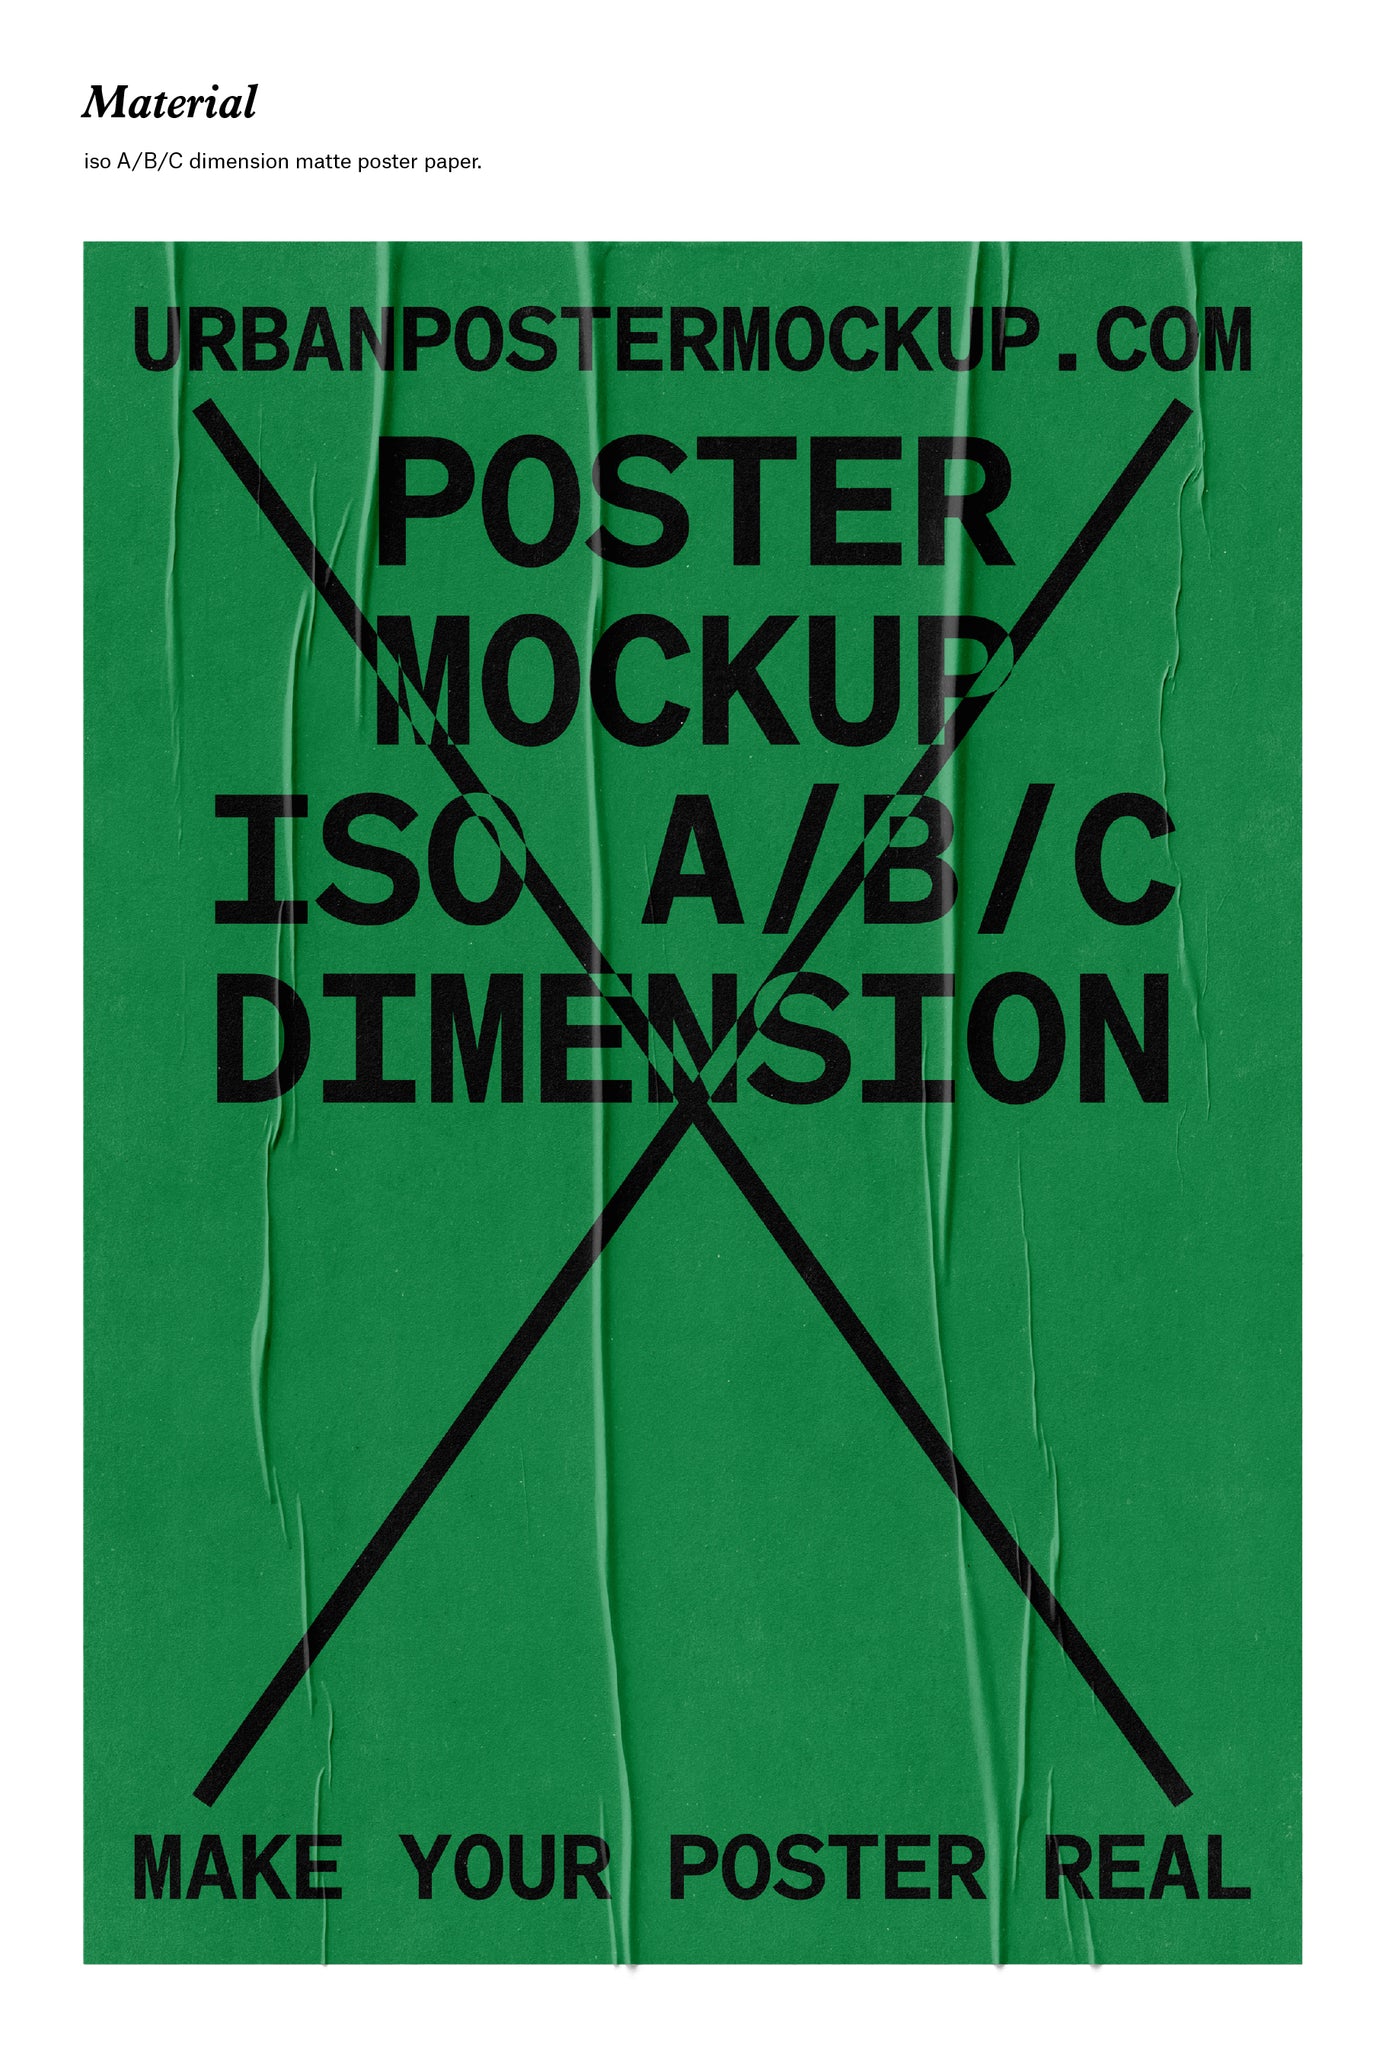 Glued Poster Paper Mockup Vol2